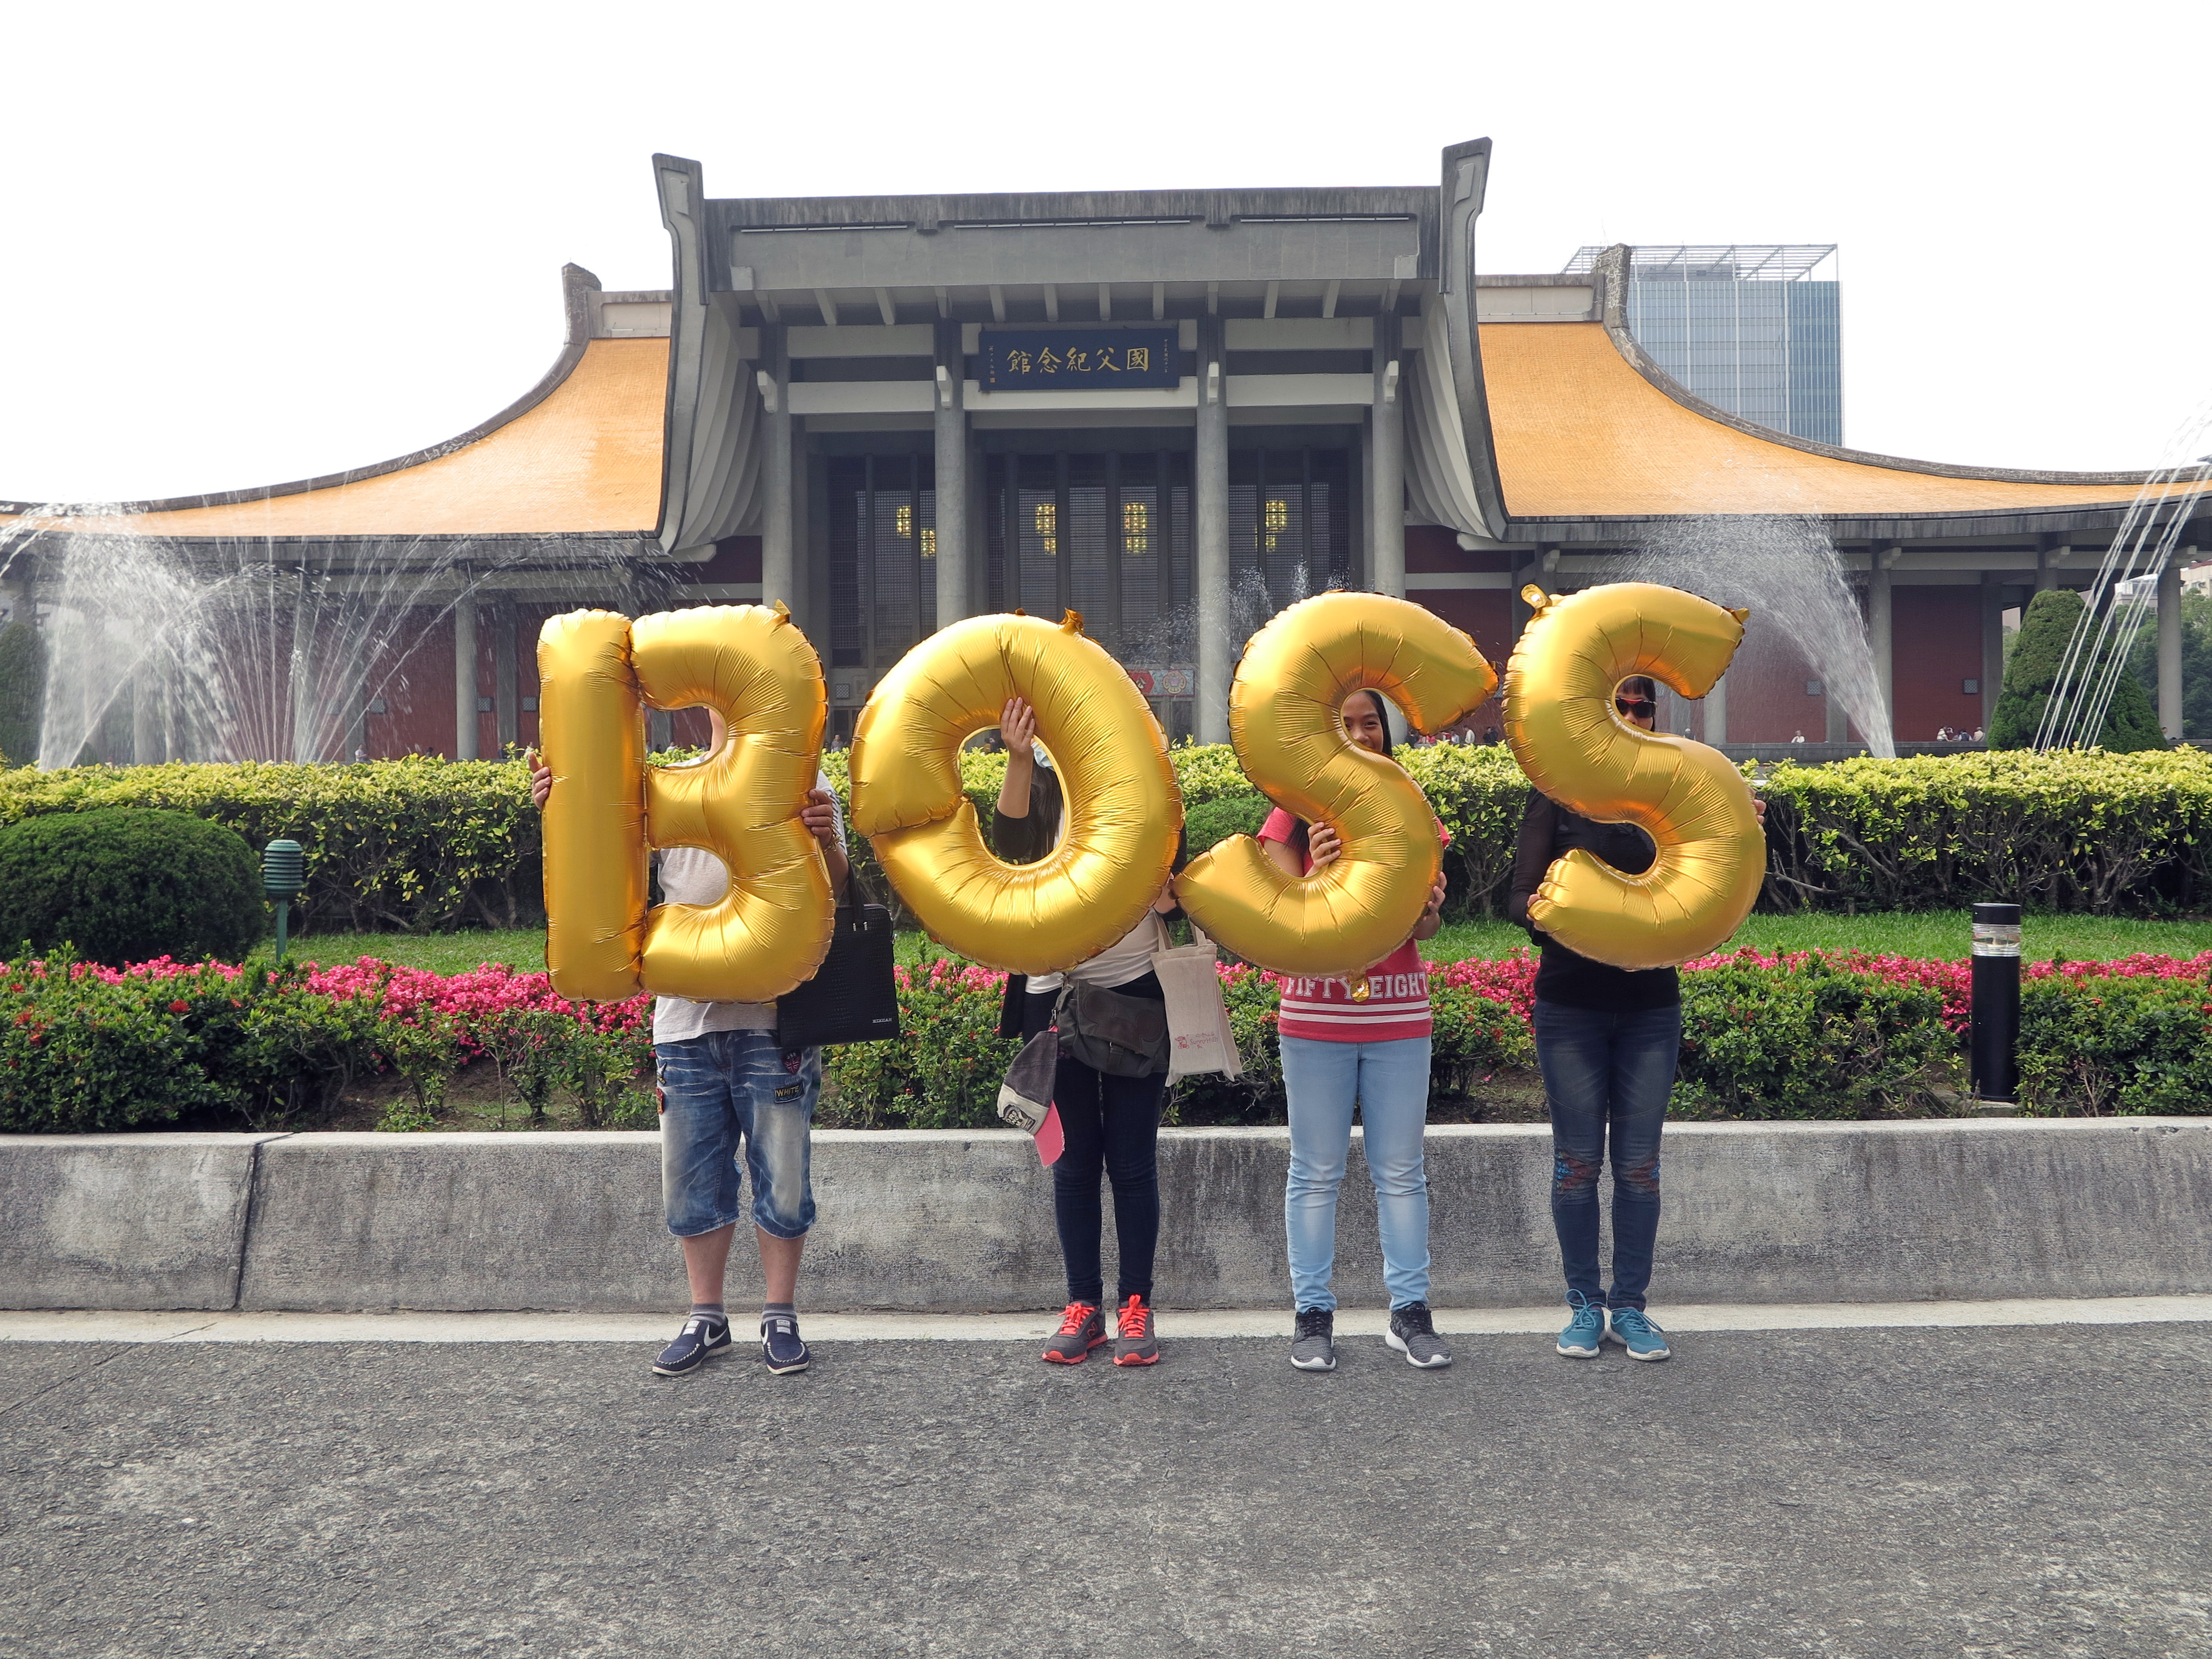 Taiwan, Taipei, Sun Yat-sen Memorial Hall - Boss, Silence Was Golden, gold balloons